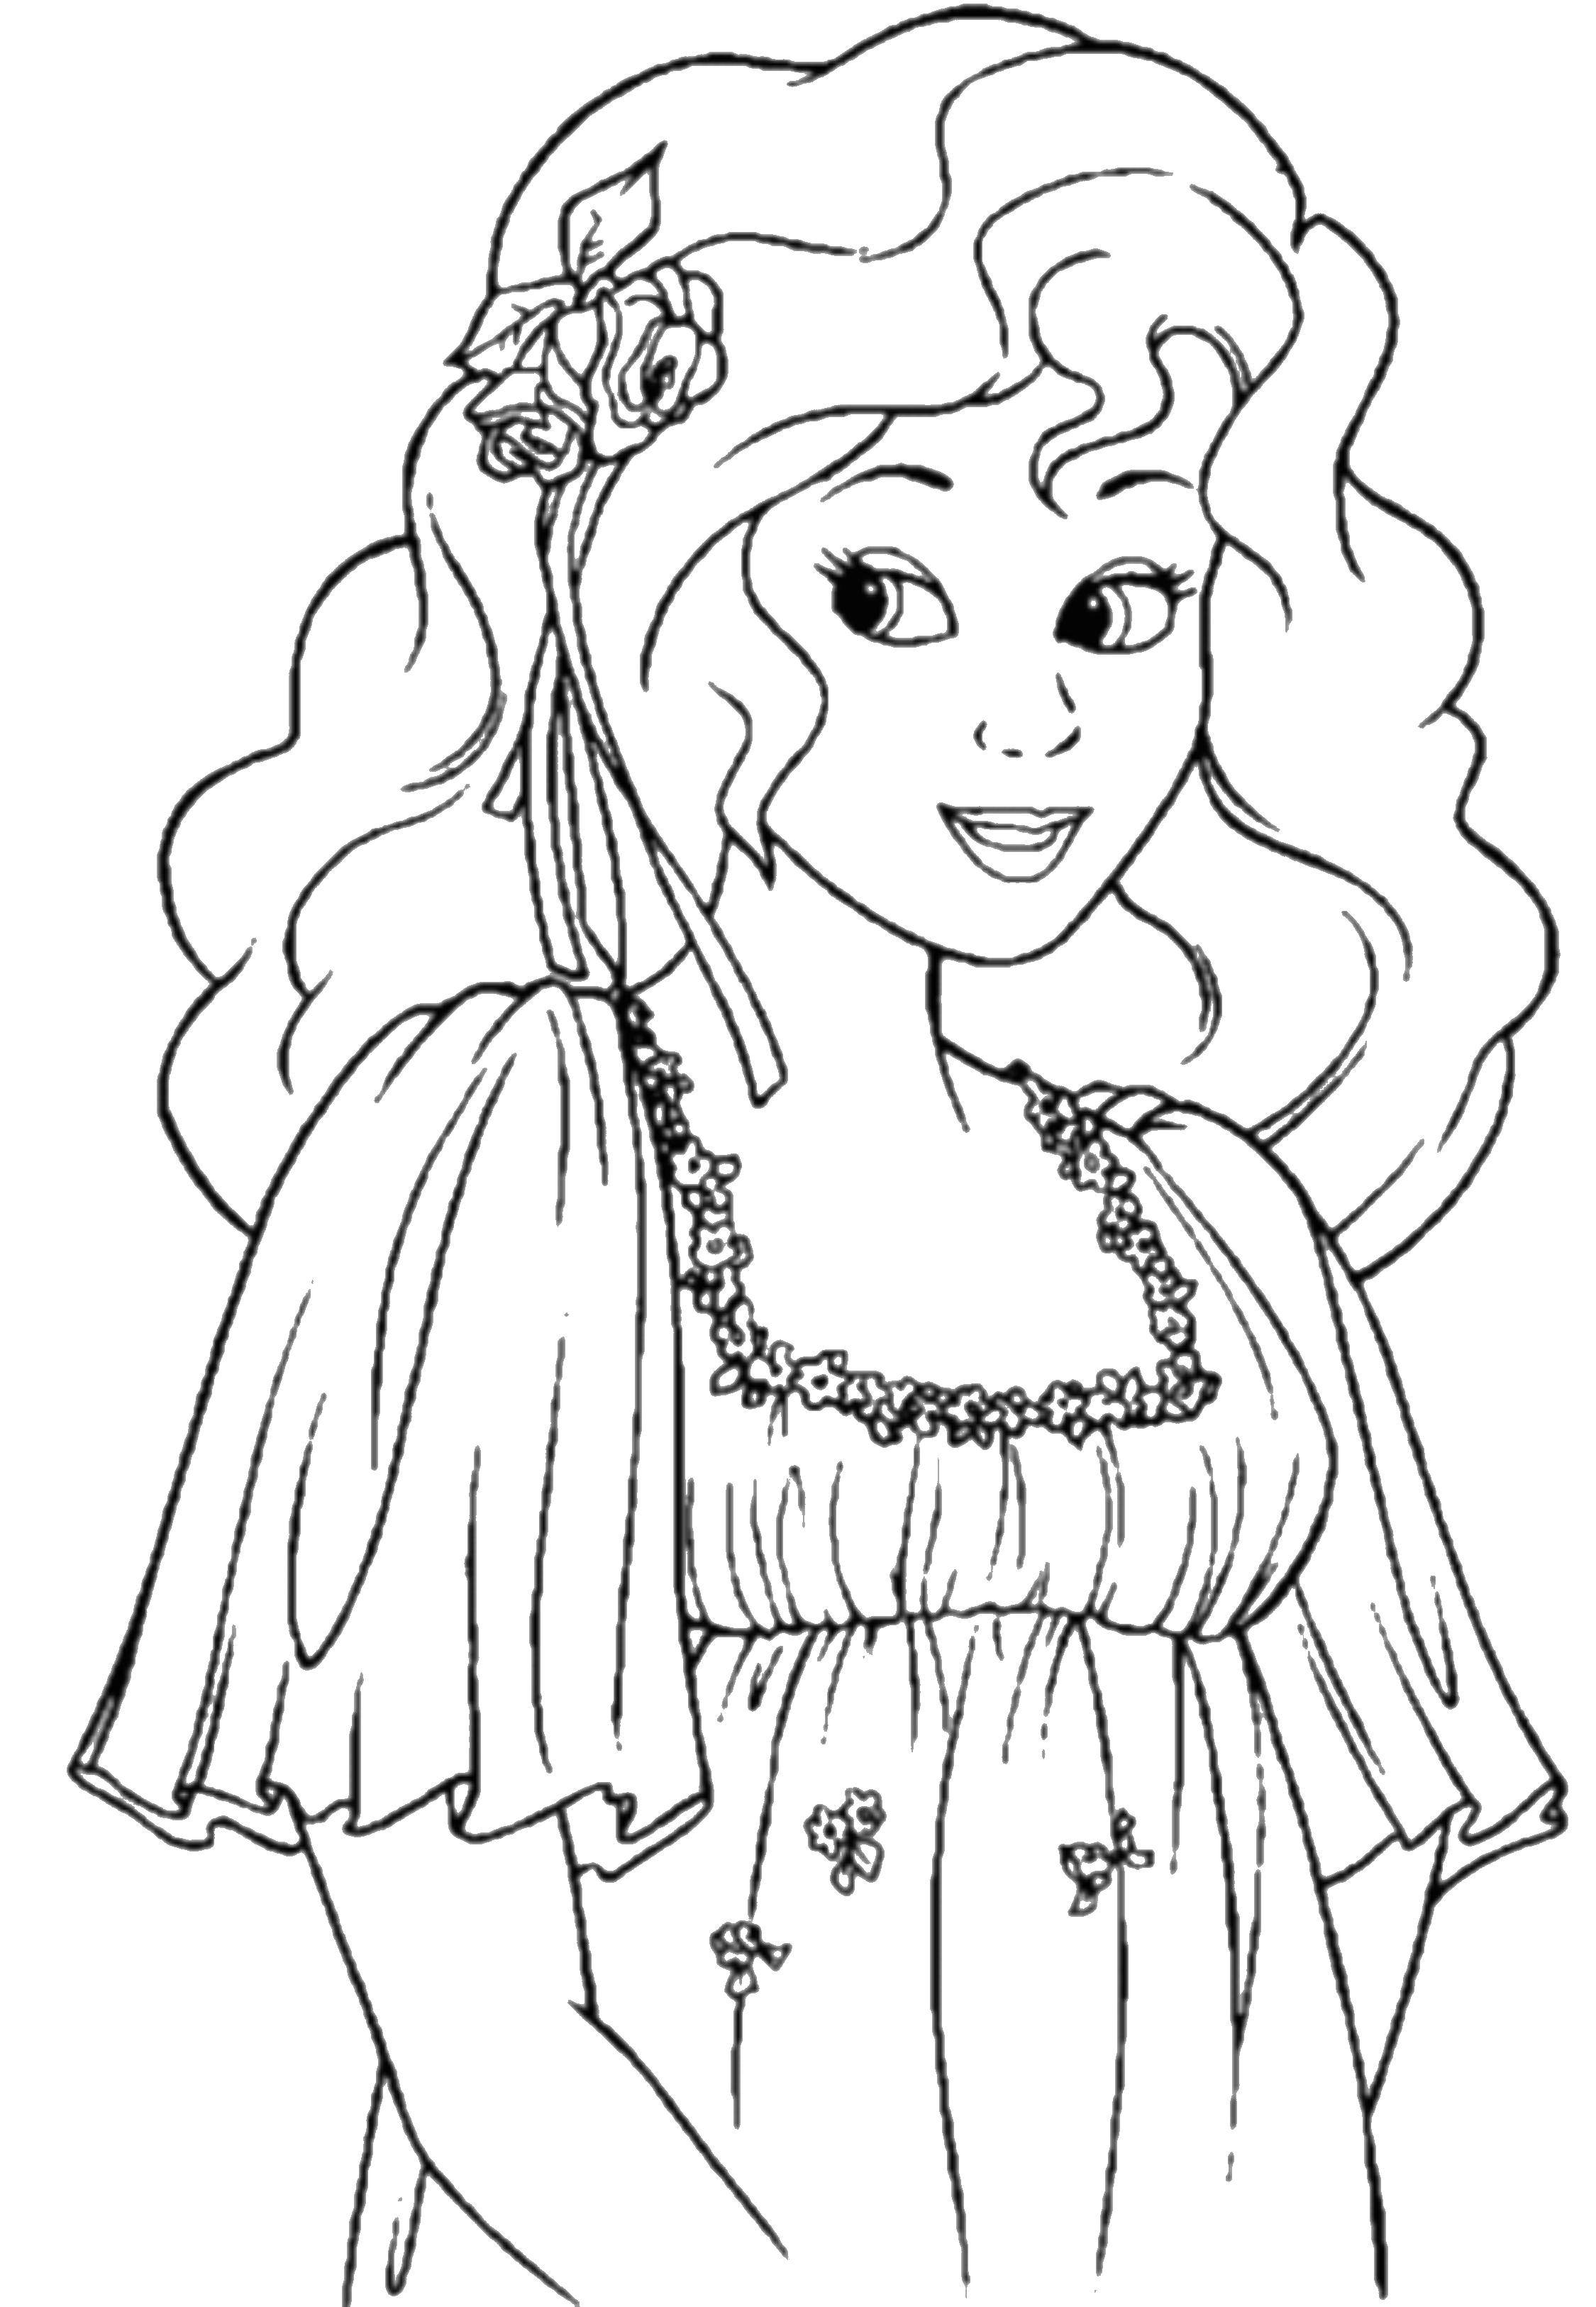 Coloring The young Princess. Category Princess. Tags:  Princess dress.